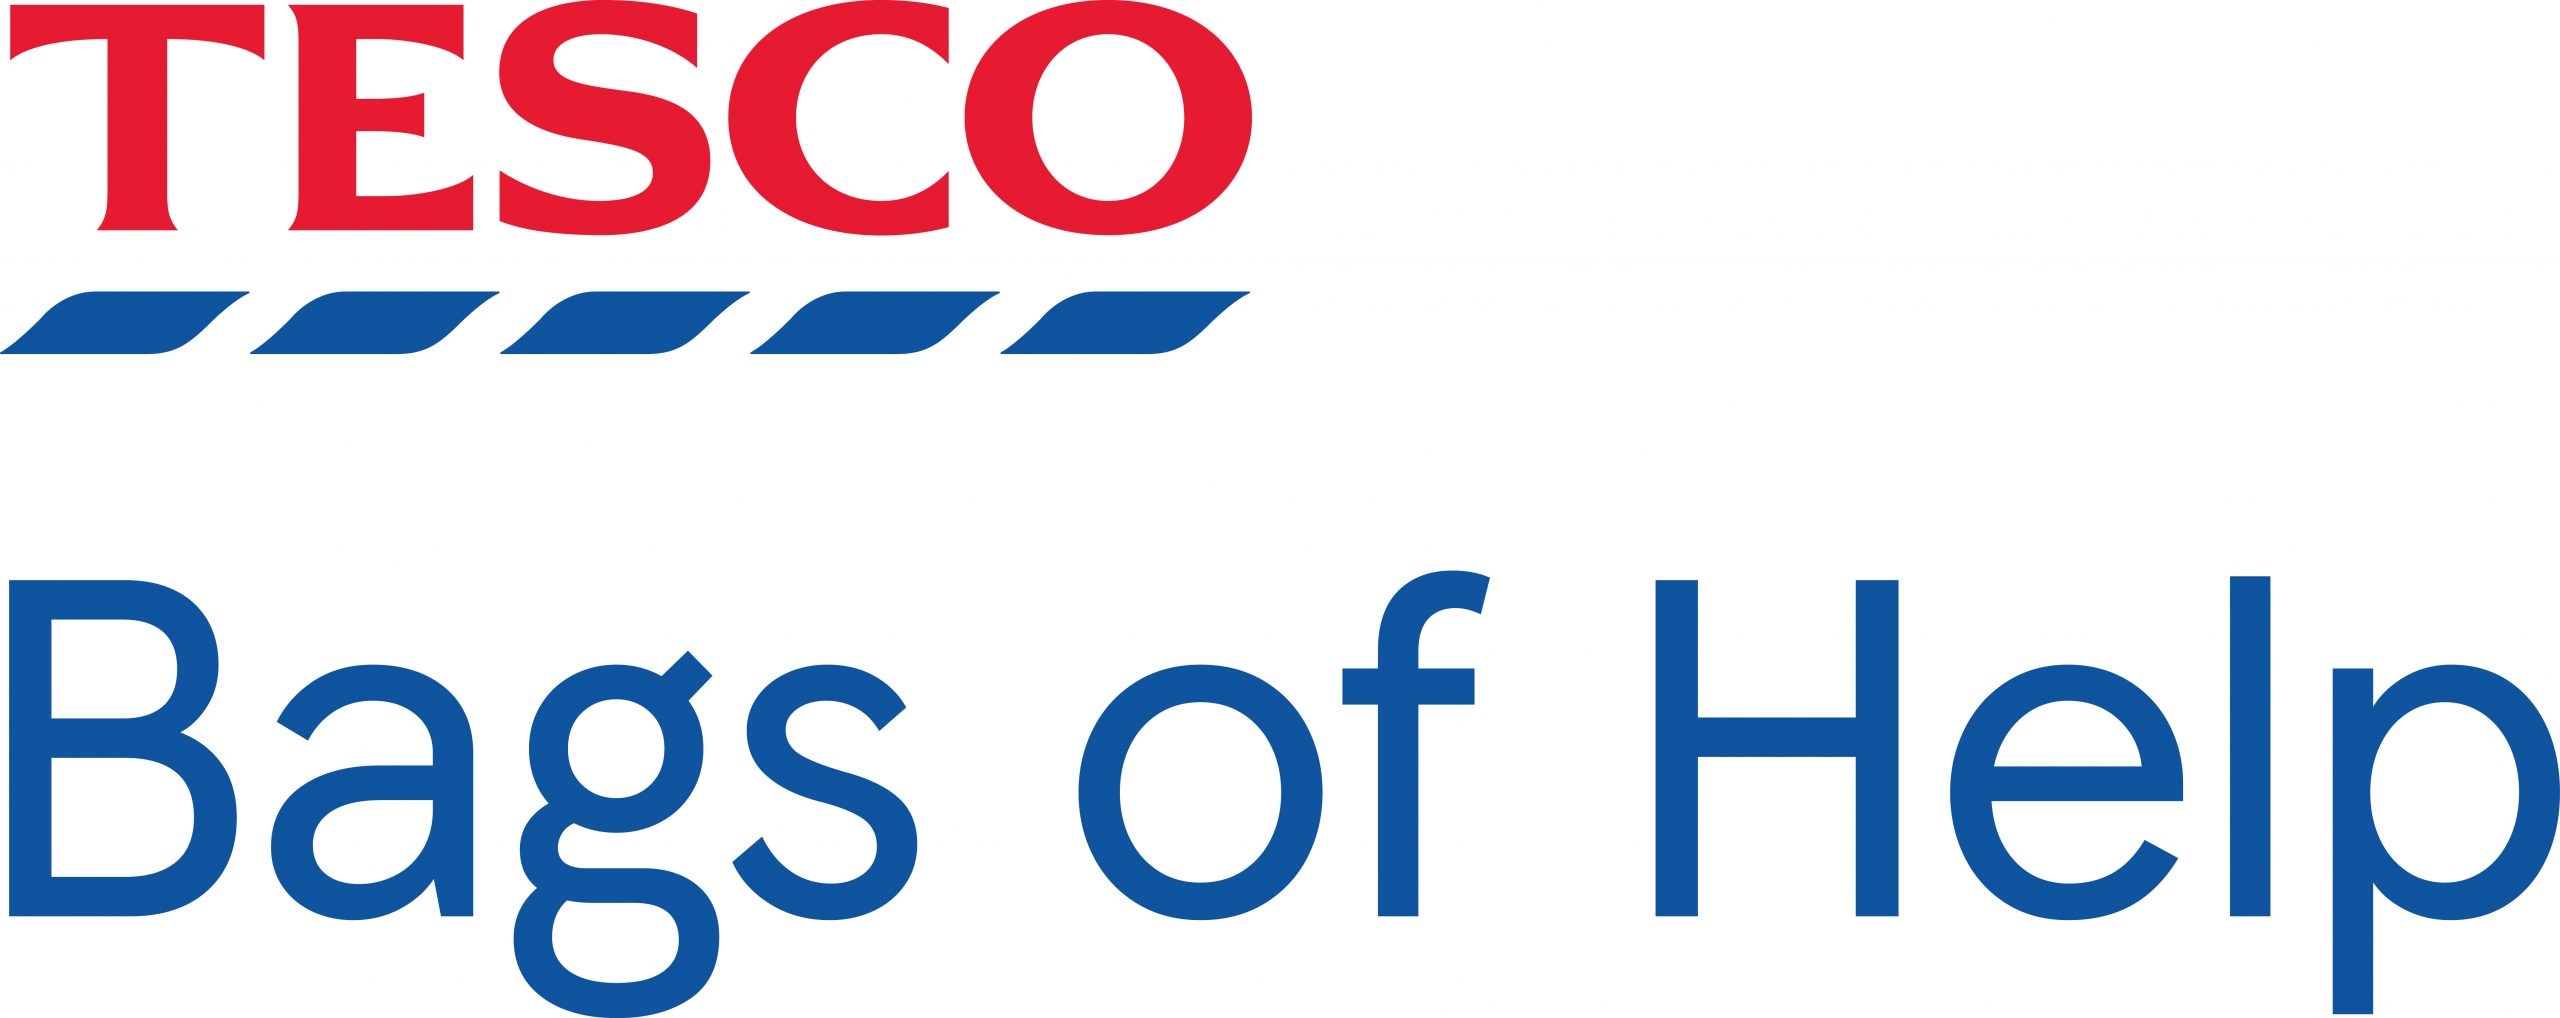 Tesco-Bags-of-Help-Vertical-logo-1